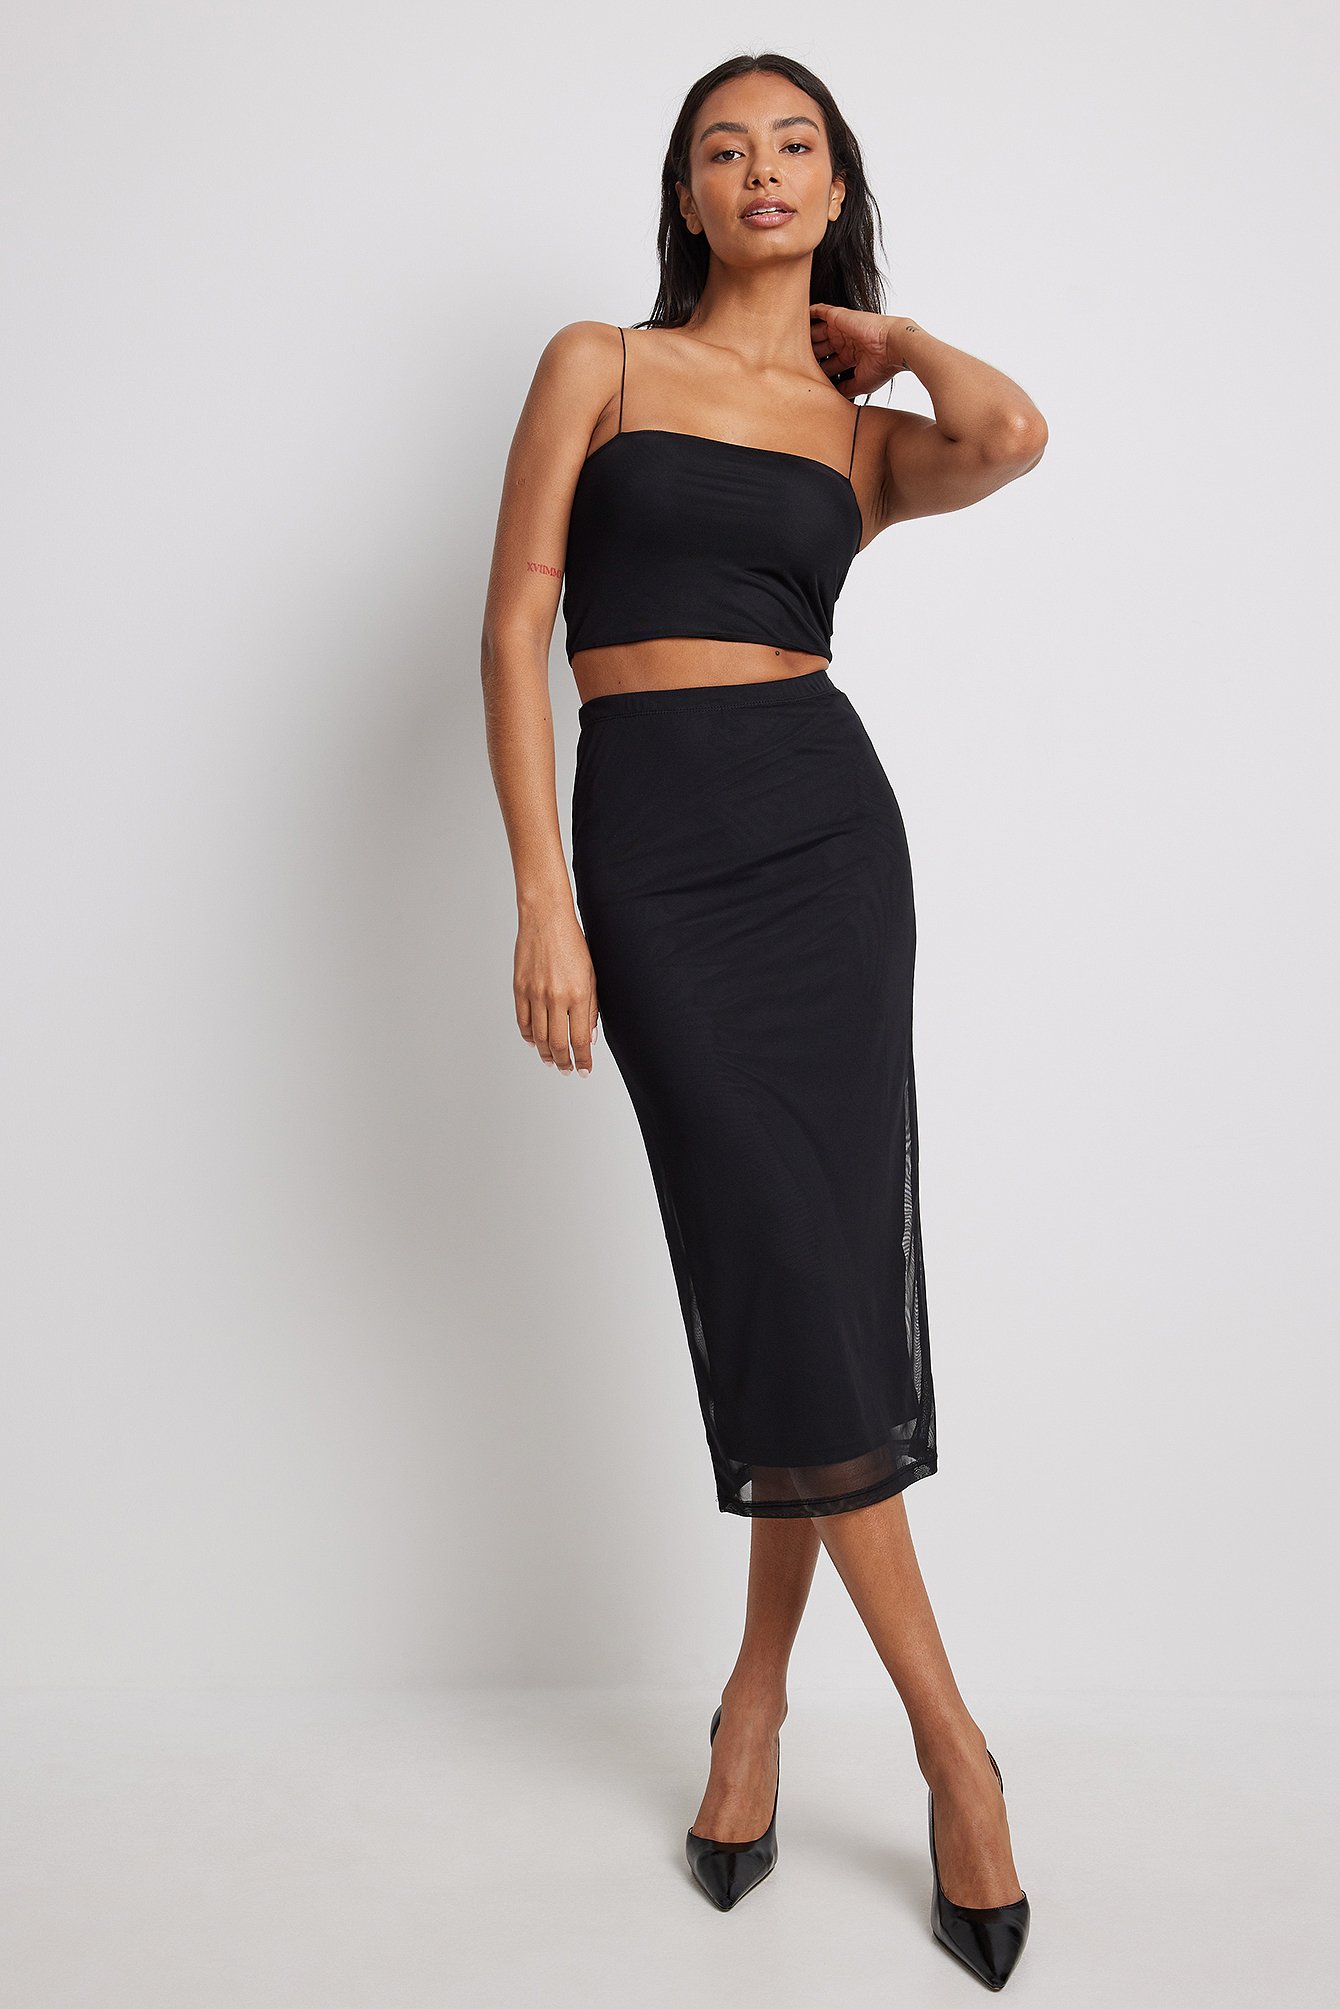 Buy Black Mesh Sheer See Through Bodycon Skirt 16 Length Online in India   Etsy